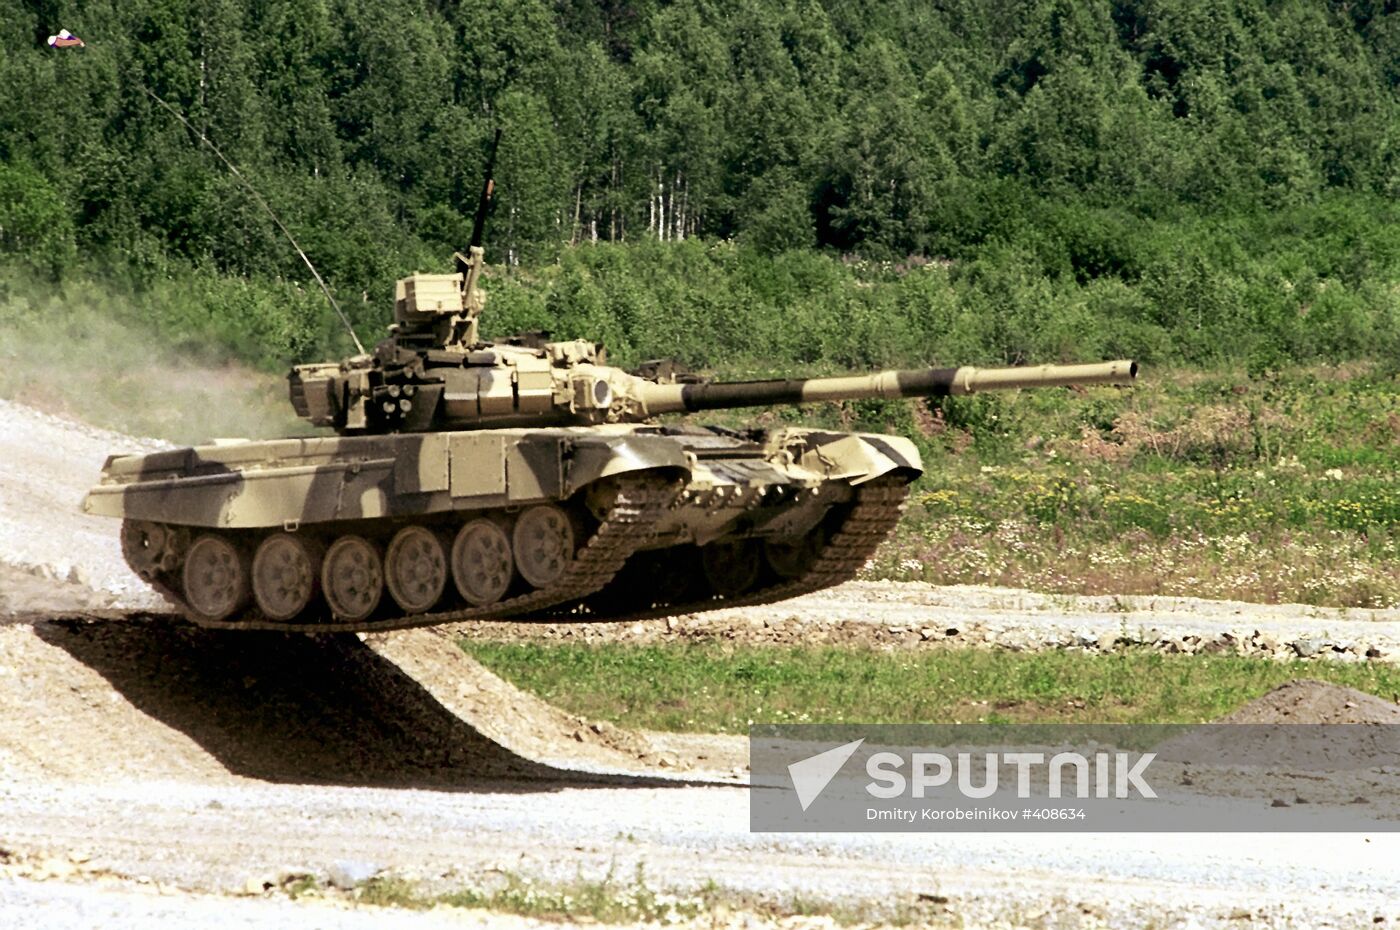 A T-90-S main battle tank